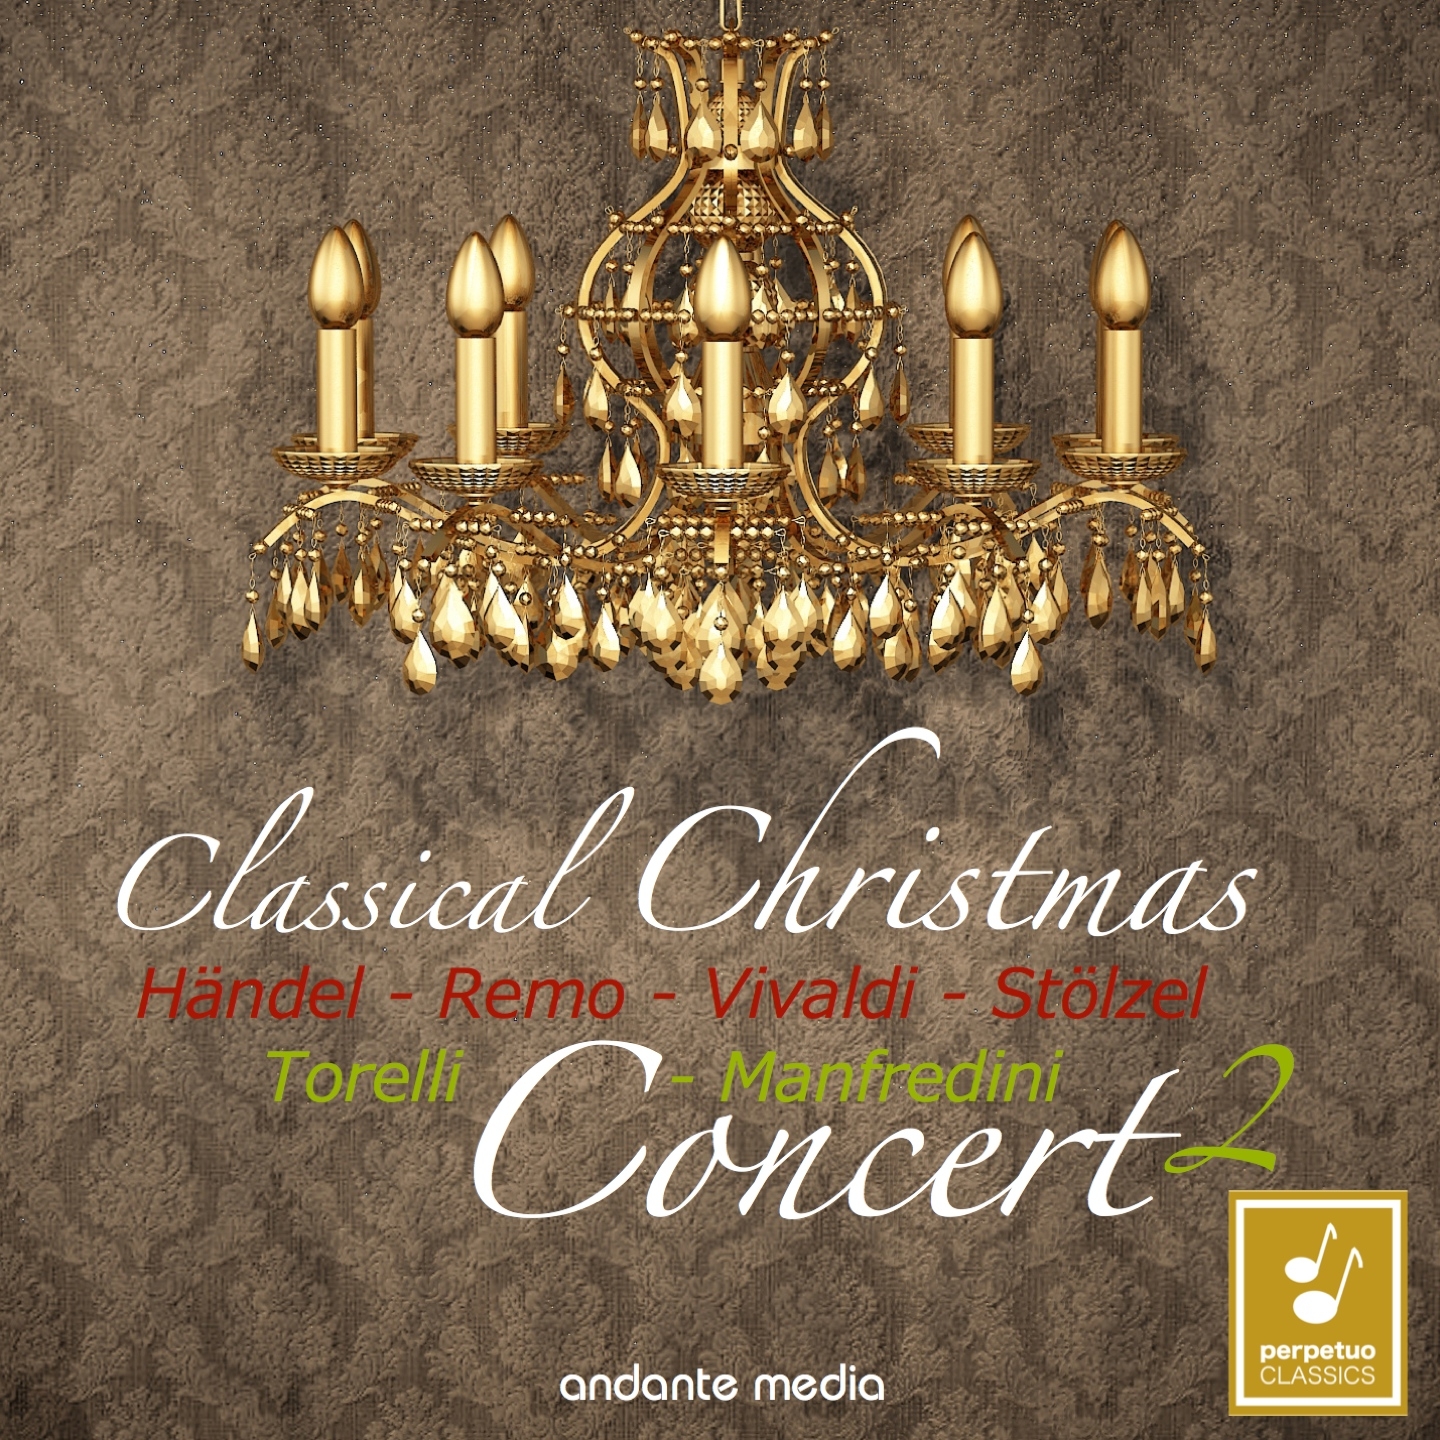 Classical Christmas Concert 2